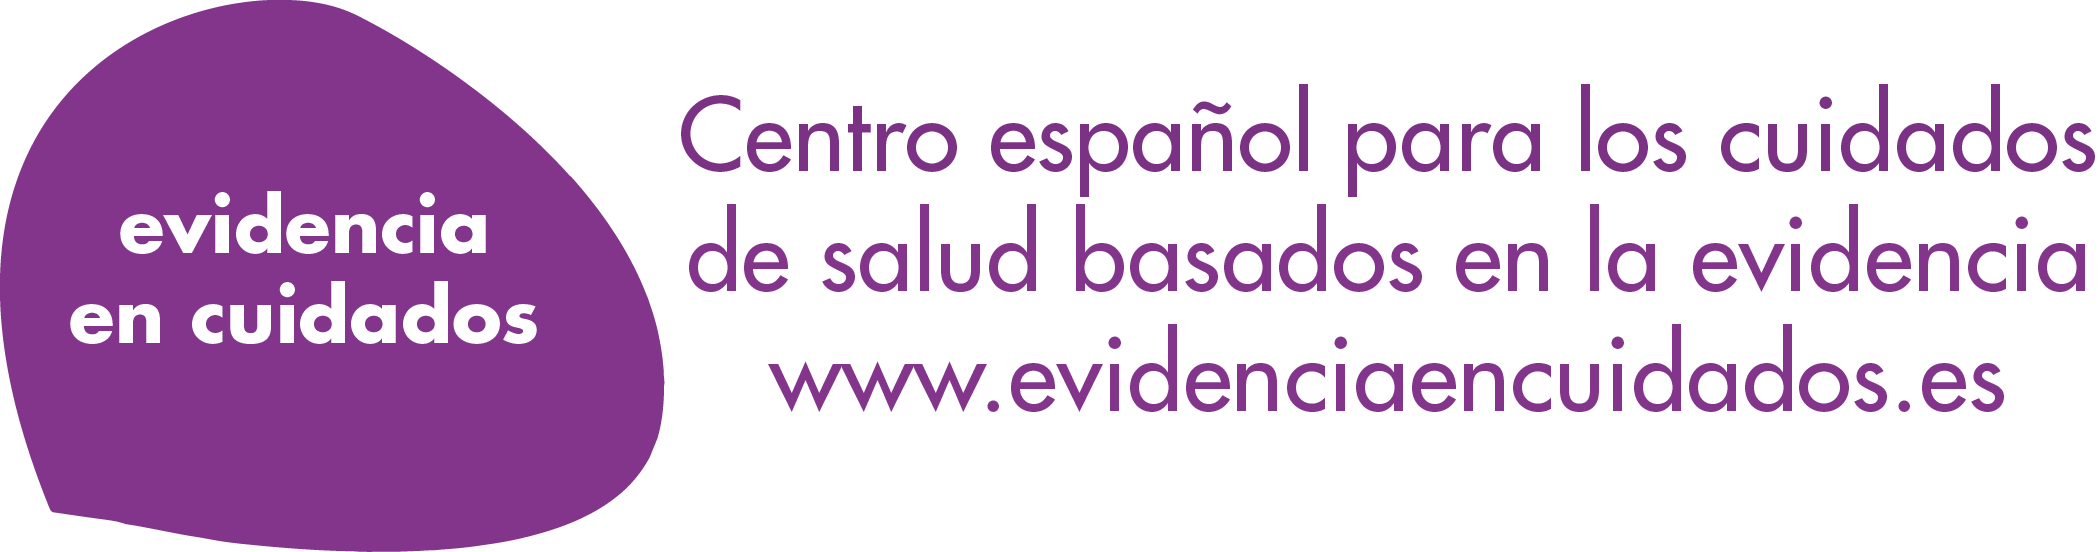 logo_centro_español_texto_nuevo_final.png